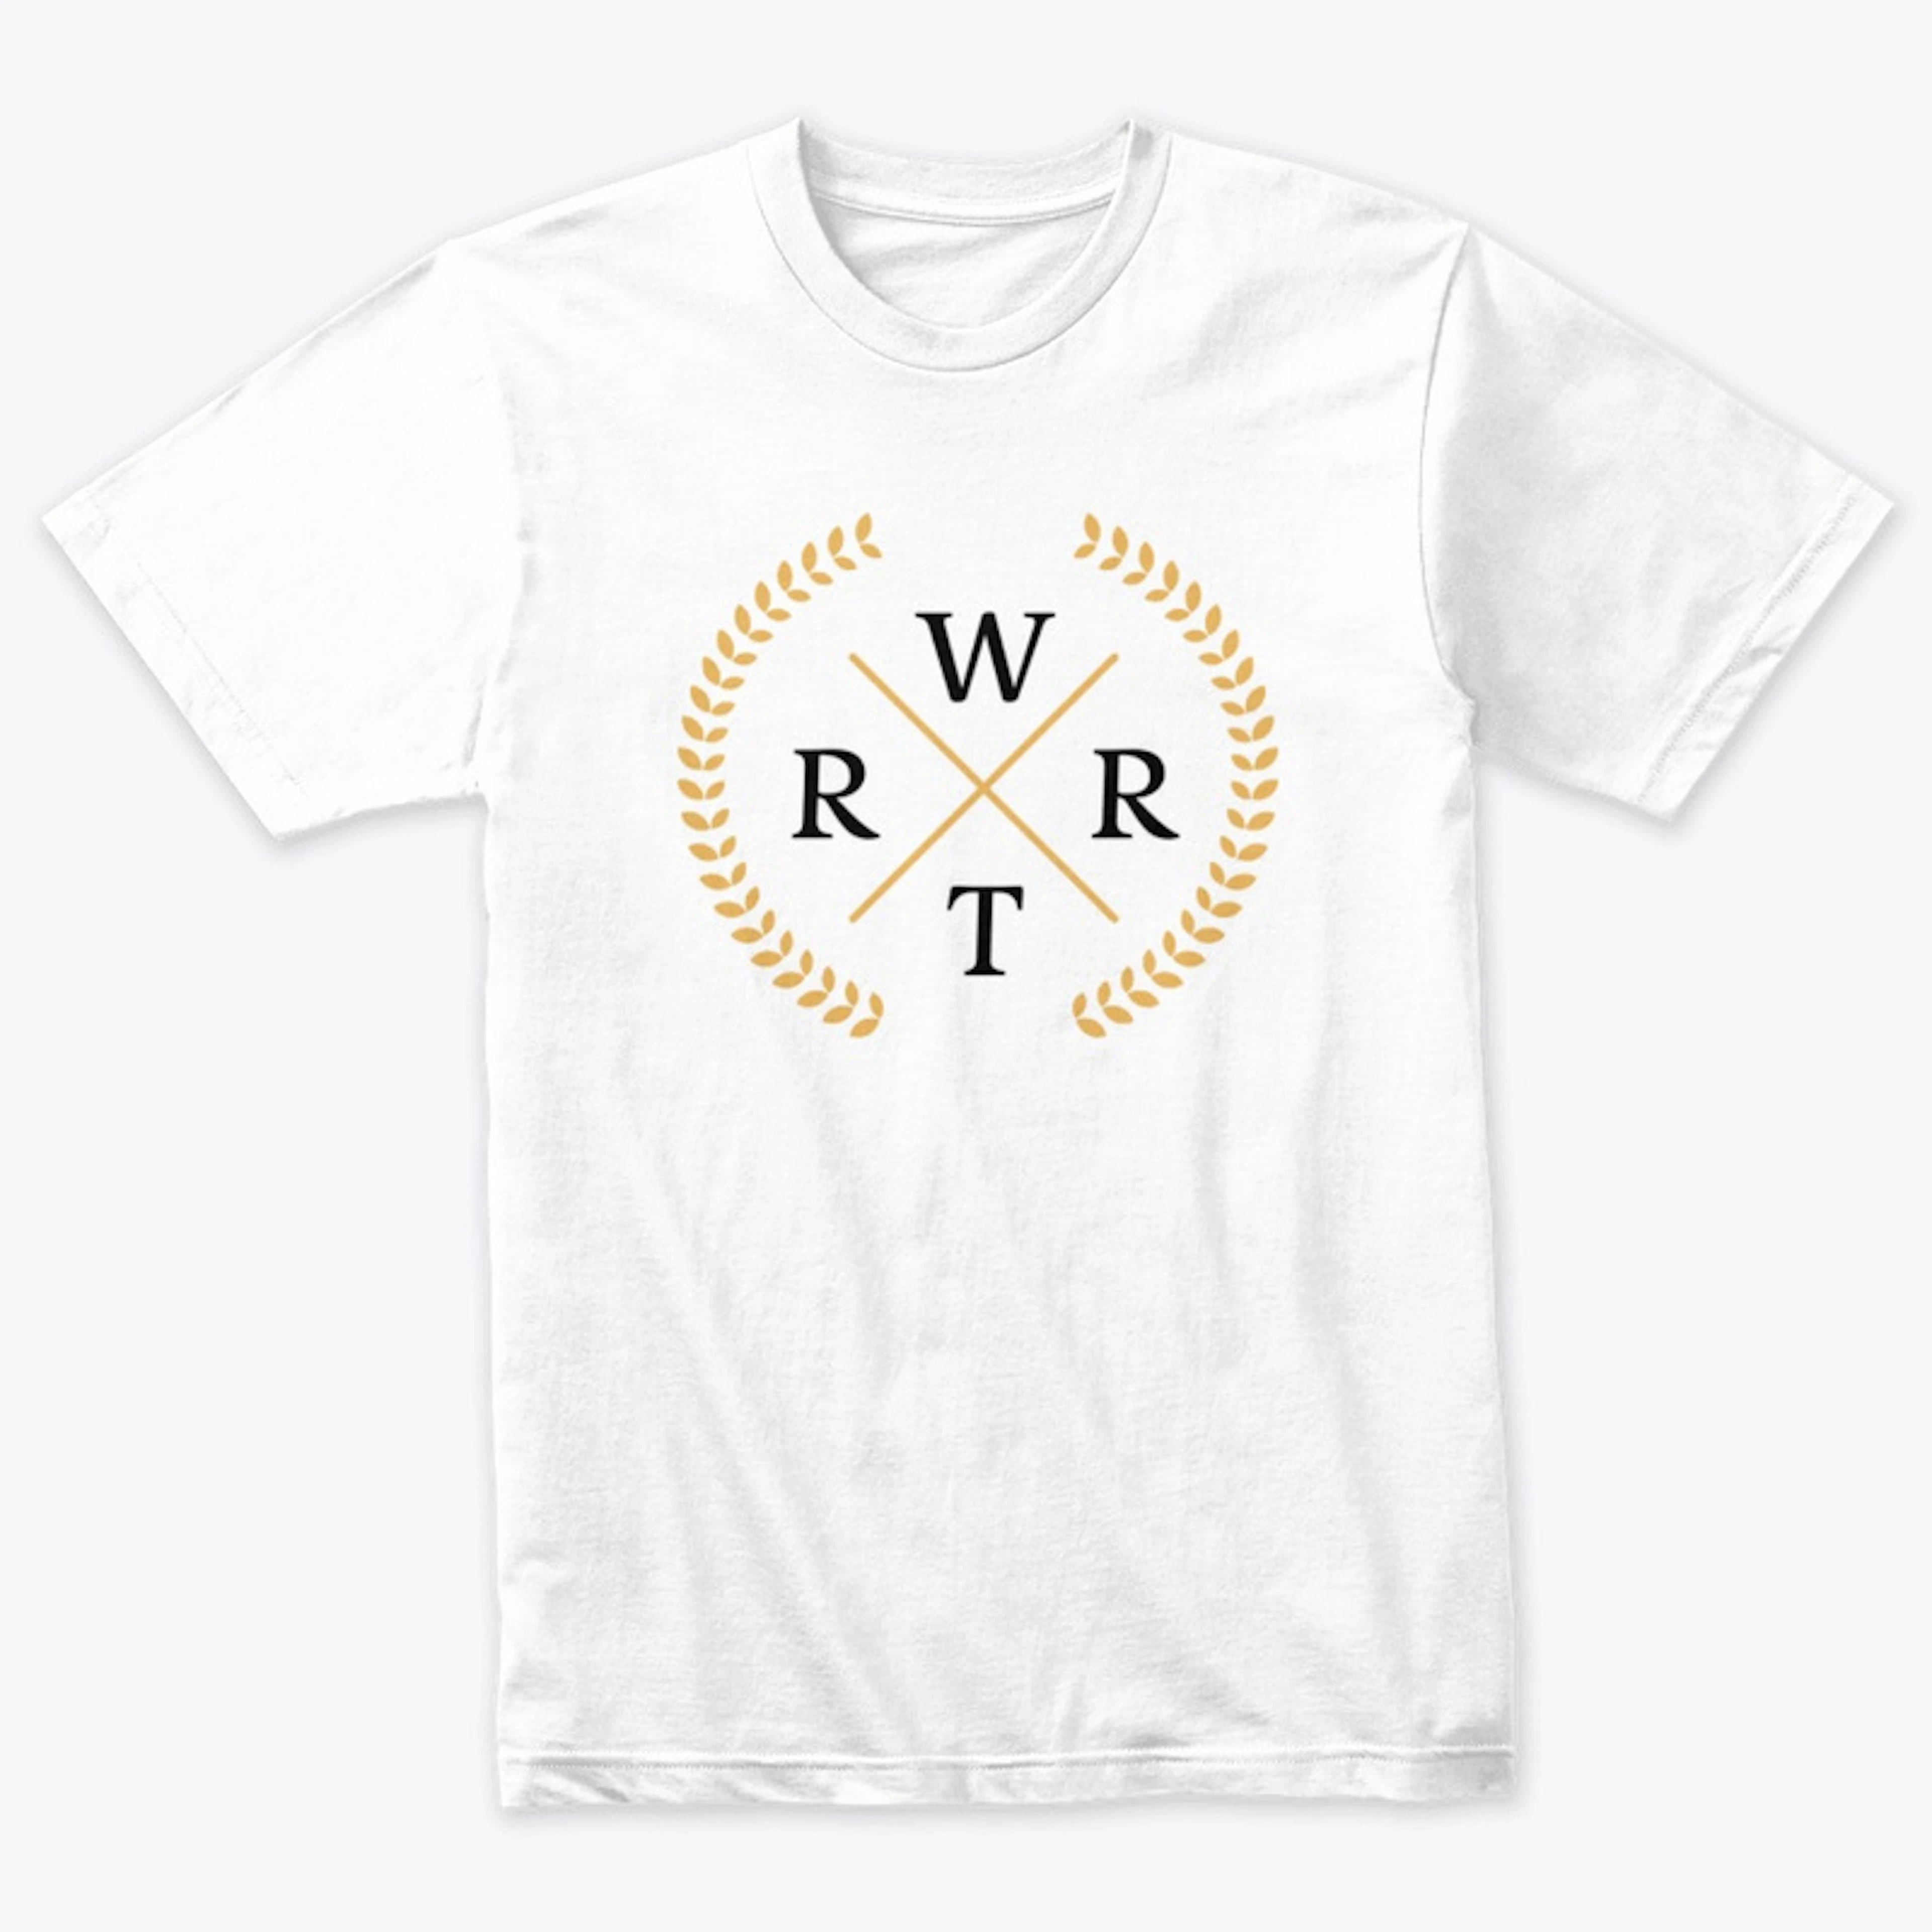 WTRR Club White T